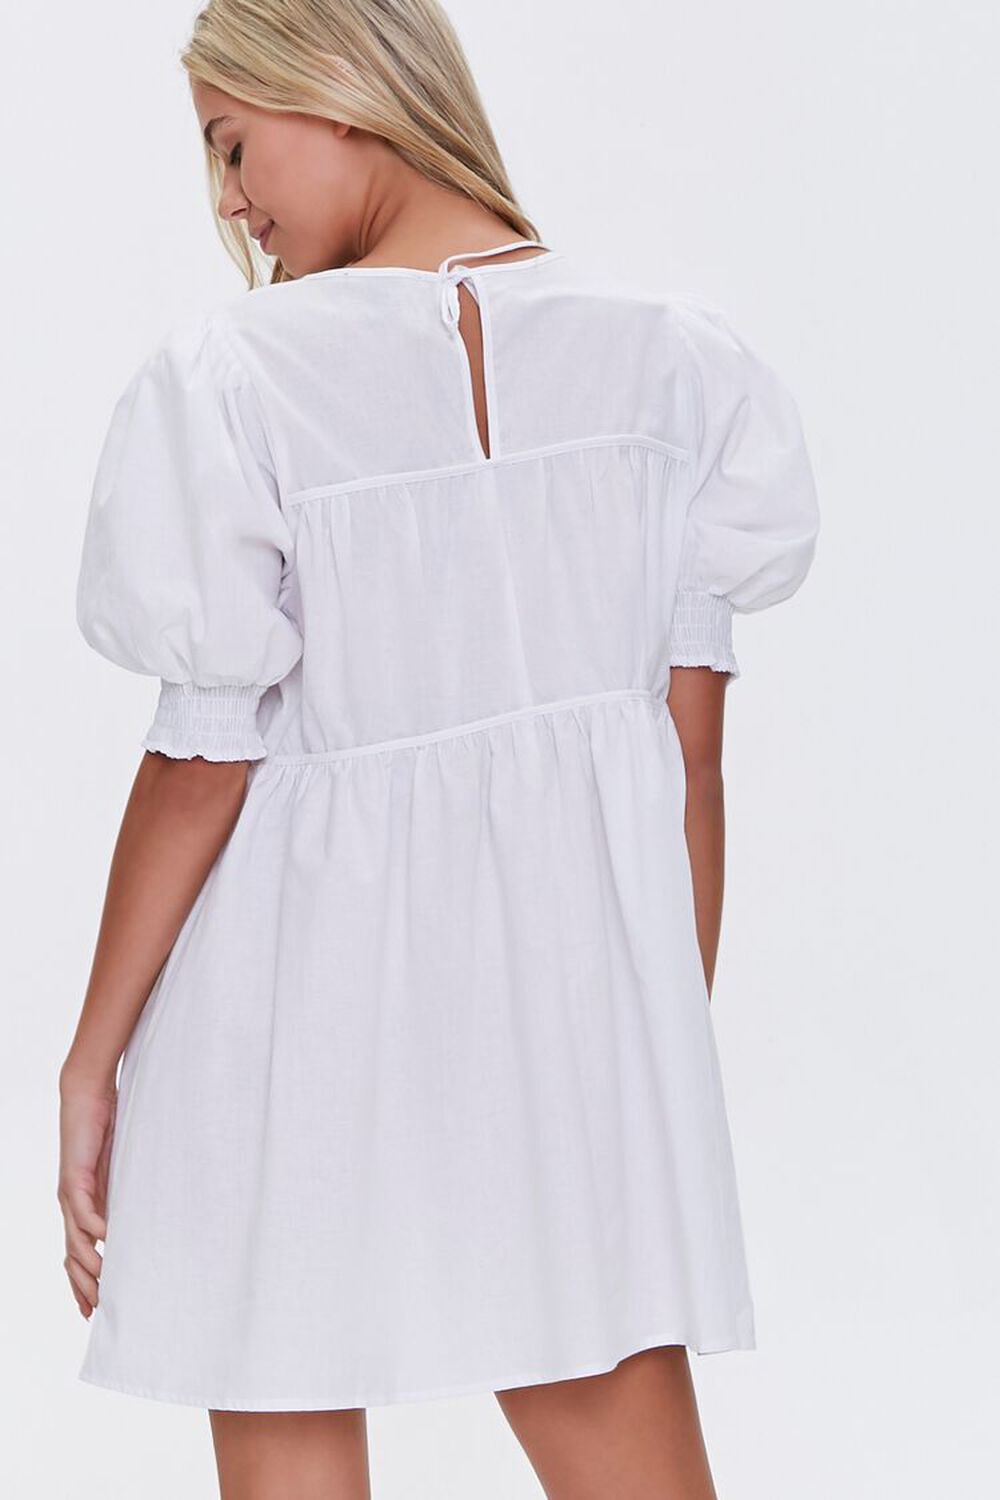 WHITE Puff-Sleeve Mini Dress, image 3